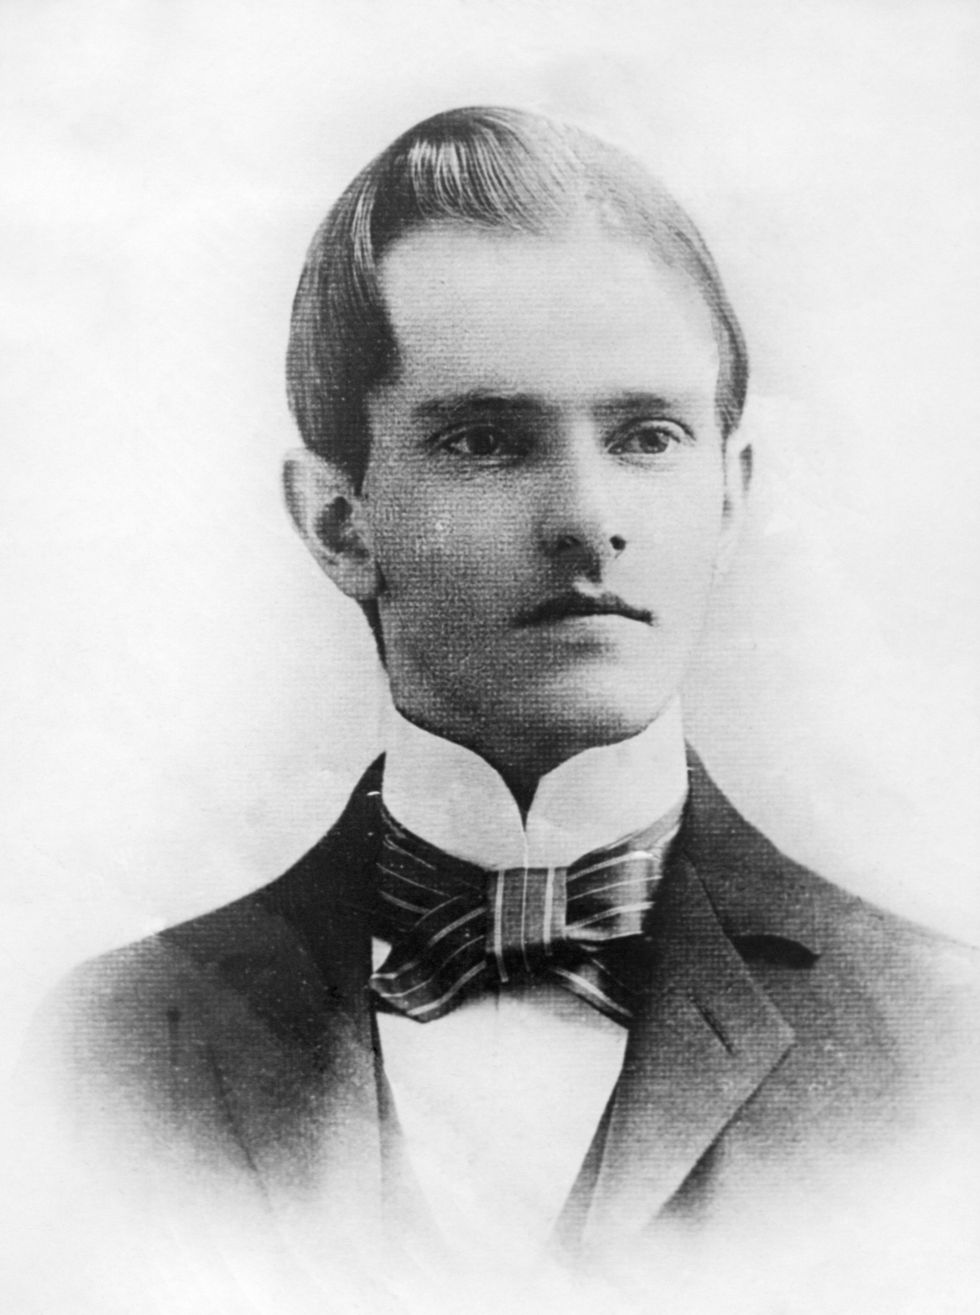 president calvin coolidge as a young man